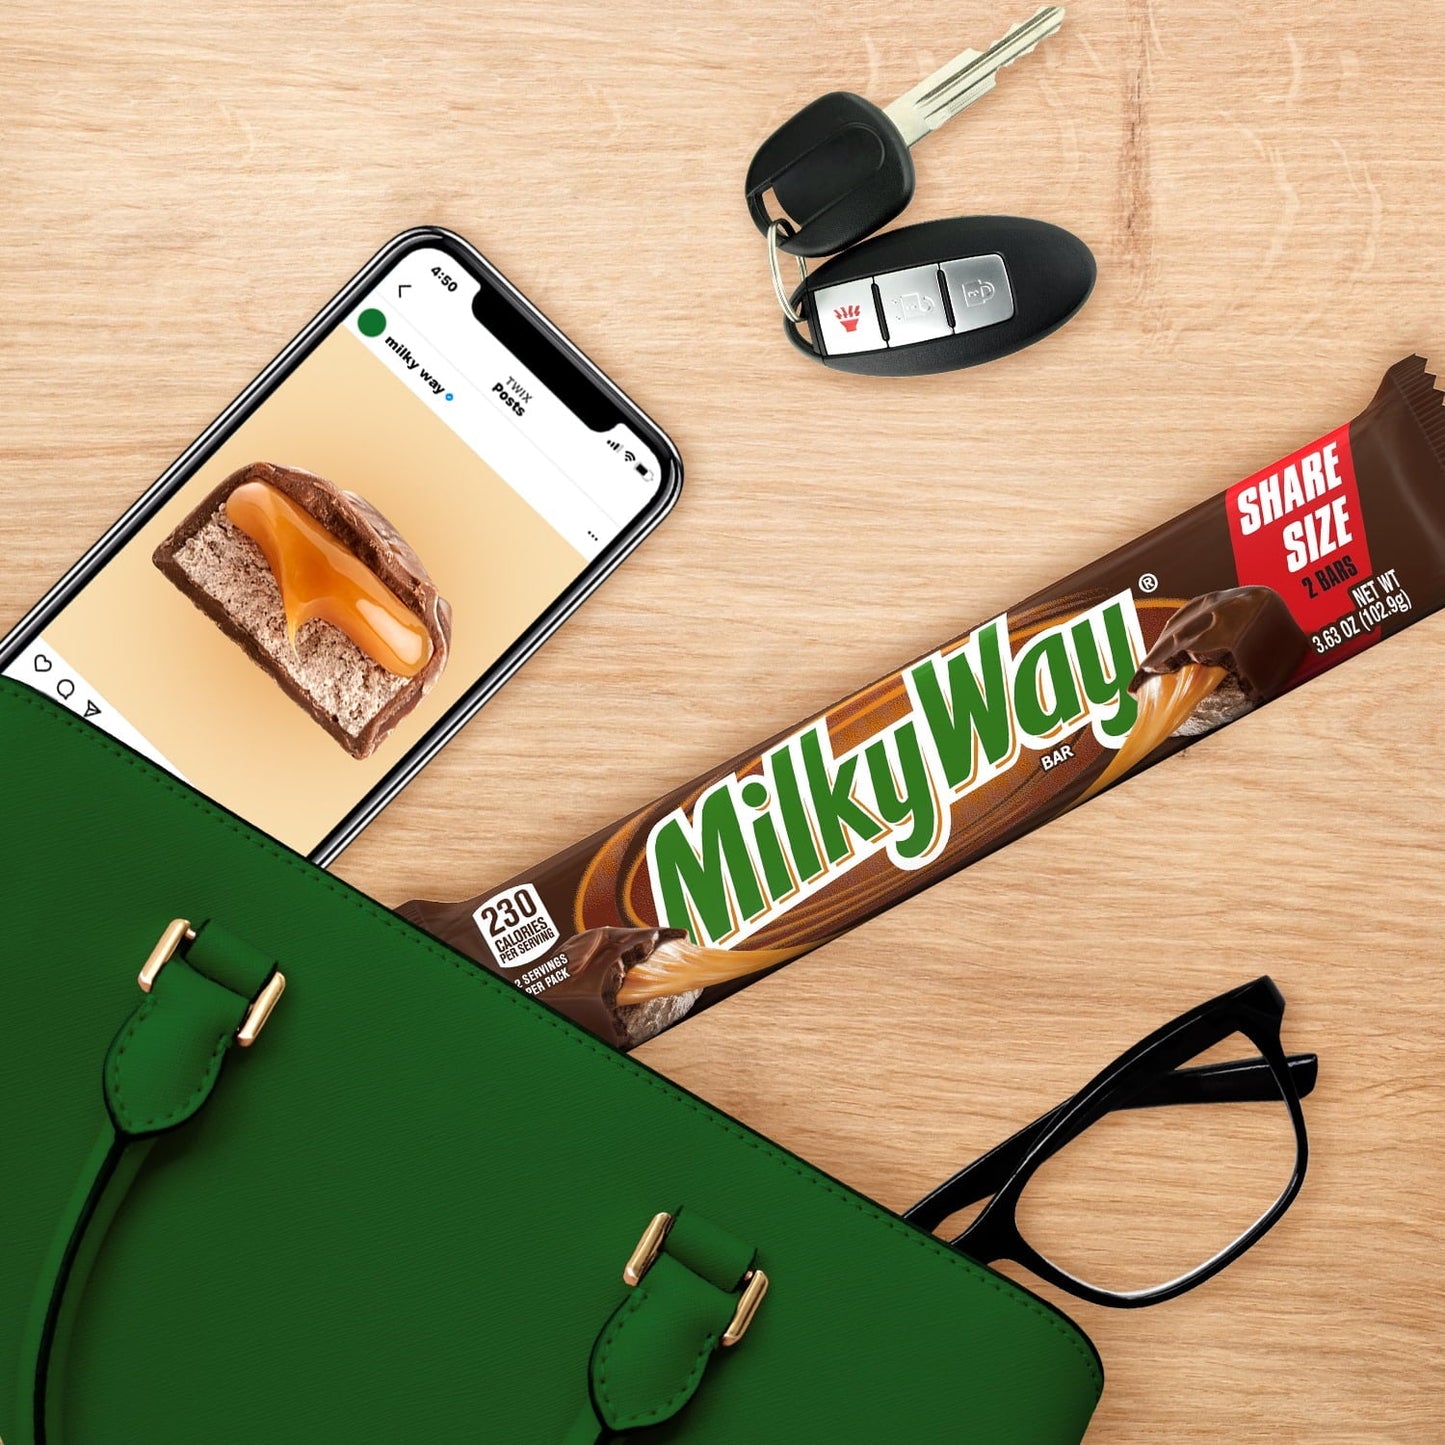 Milky Way Candy Milk Chocolate Bar, Share Size - 3.63 oz